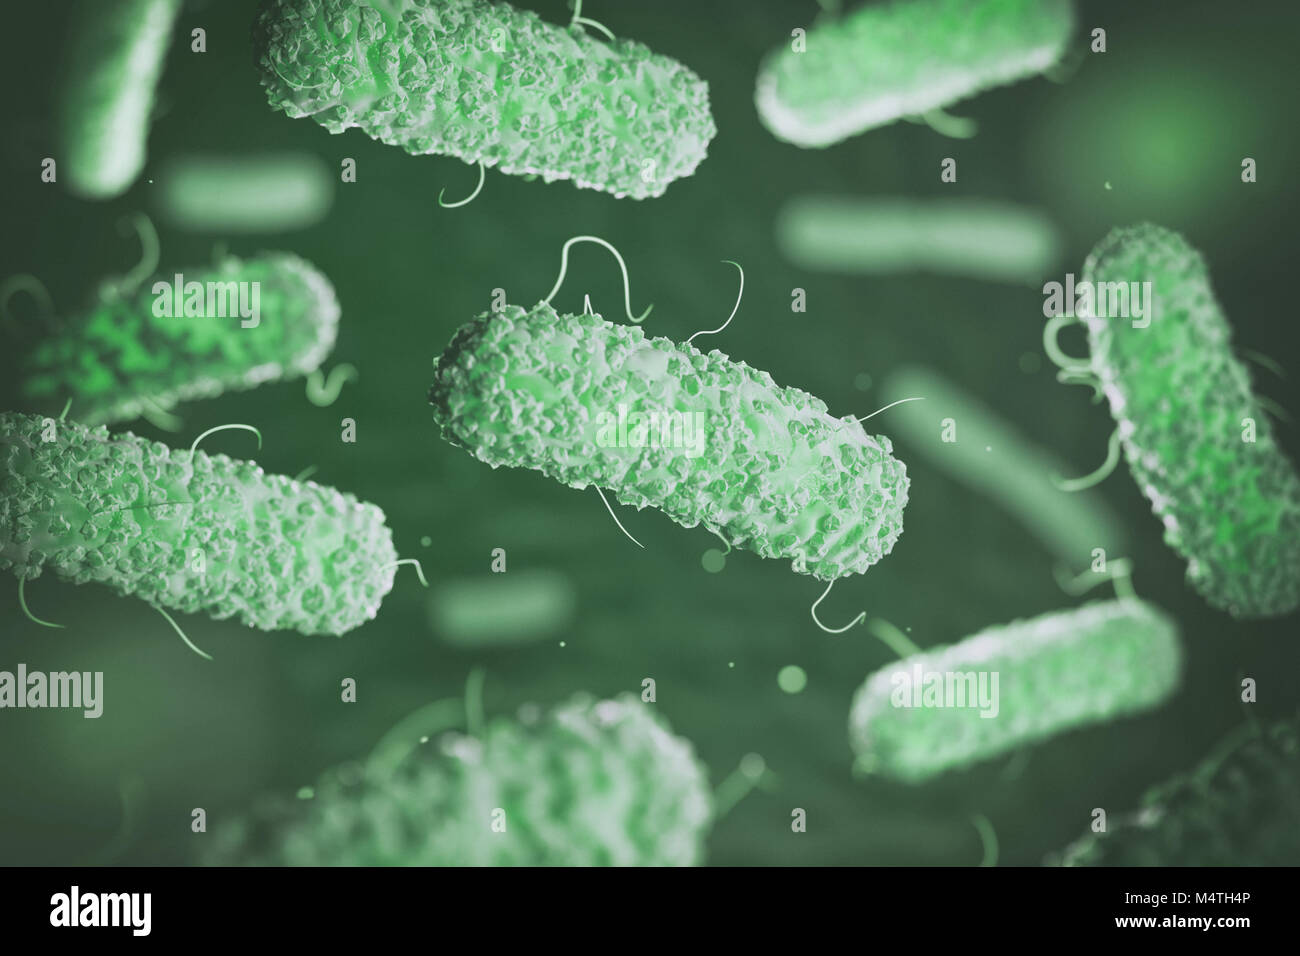 Enterobacterias. Gram-negative bacterias escherichia coli, salmonella, klebsiella, legionella, mycobacterium tuberculosis, yersinia pestis,  and shige Stock Photo